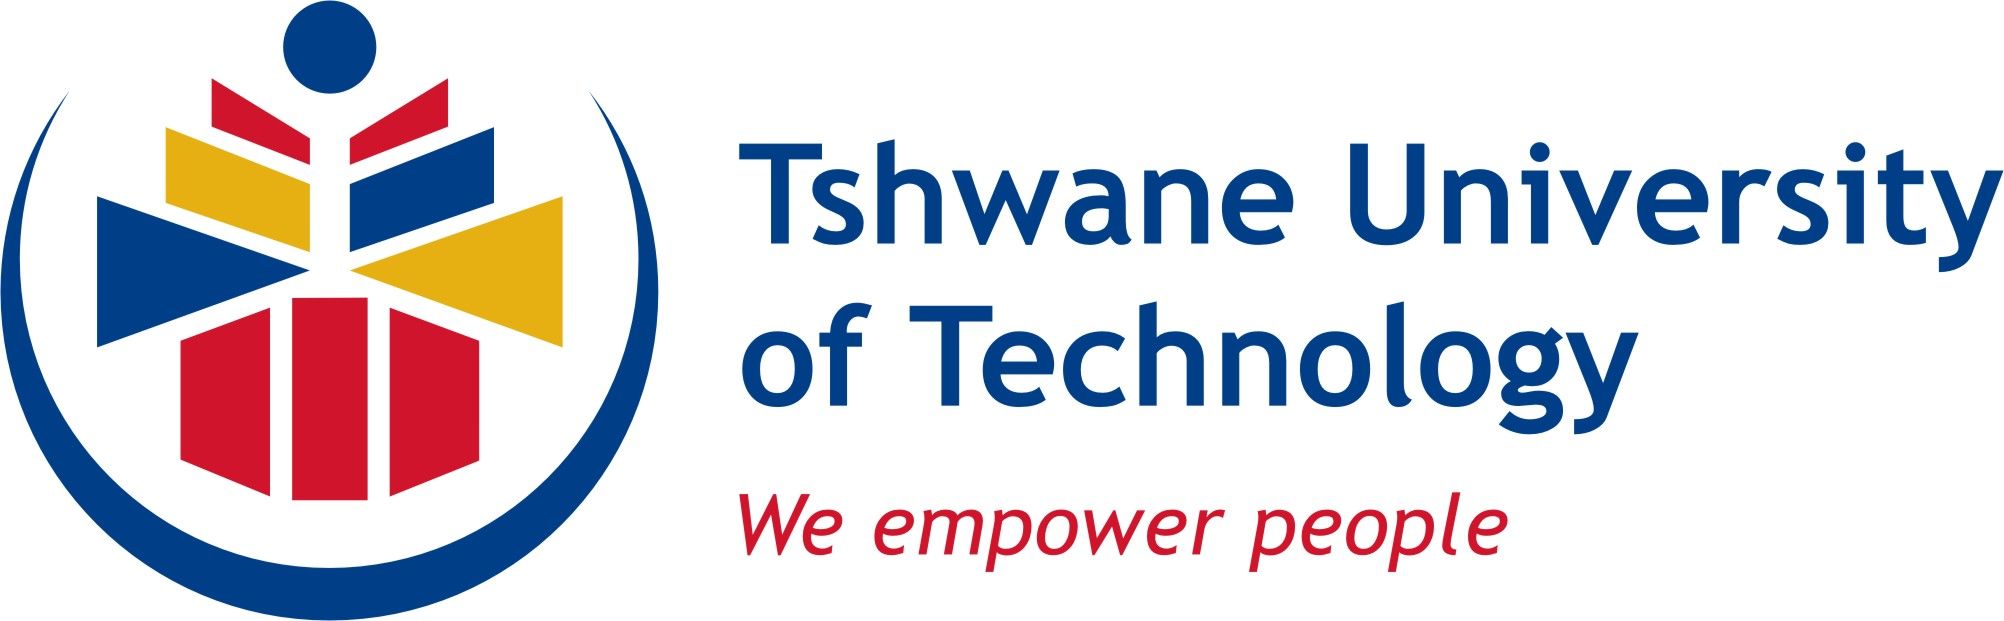 tshwane-university-of-technology-31282870